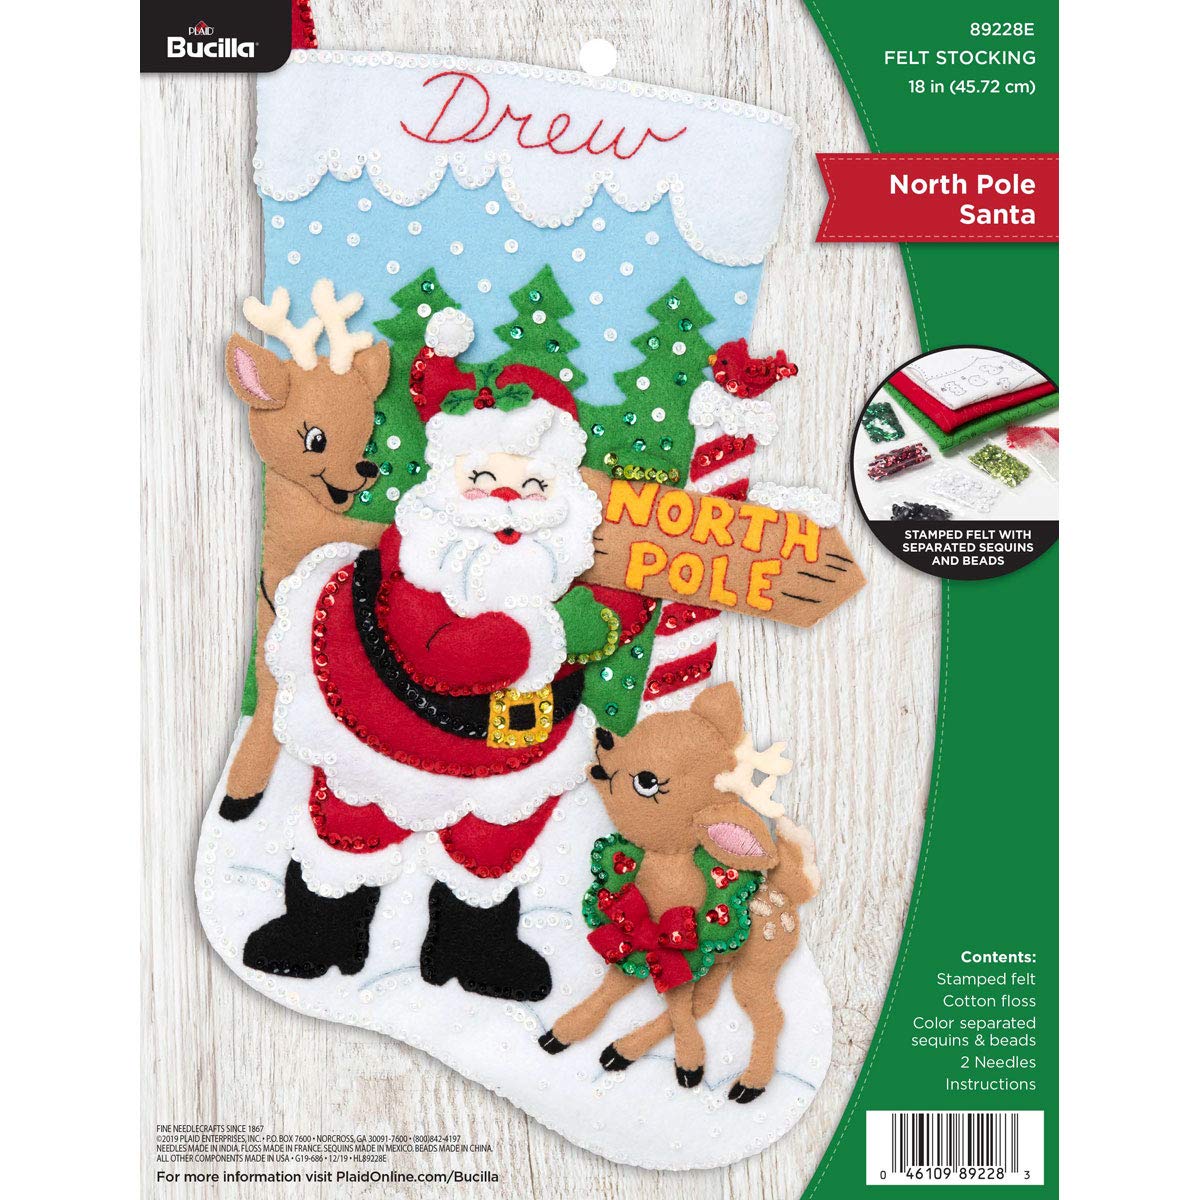 Bucilla Christmas Stocking story Time Santa Made to Order 